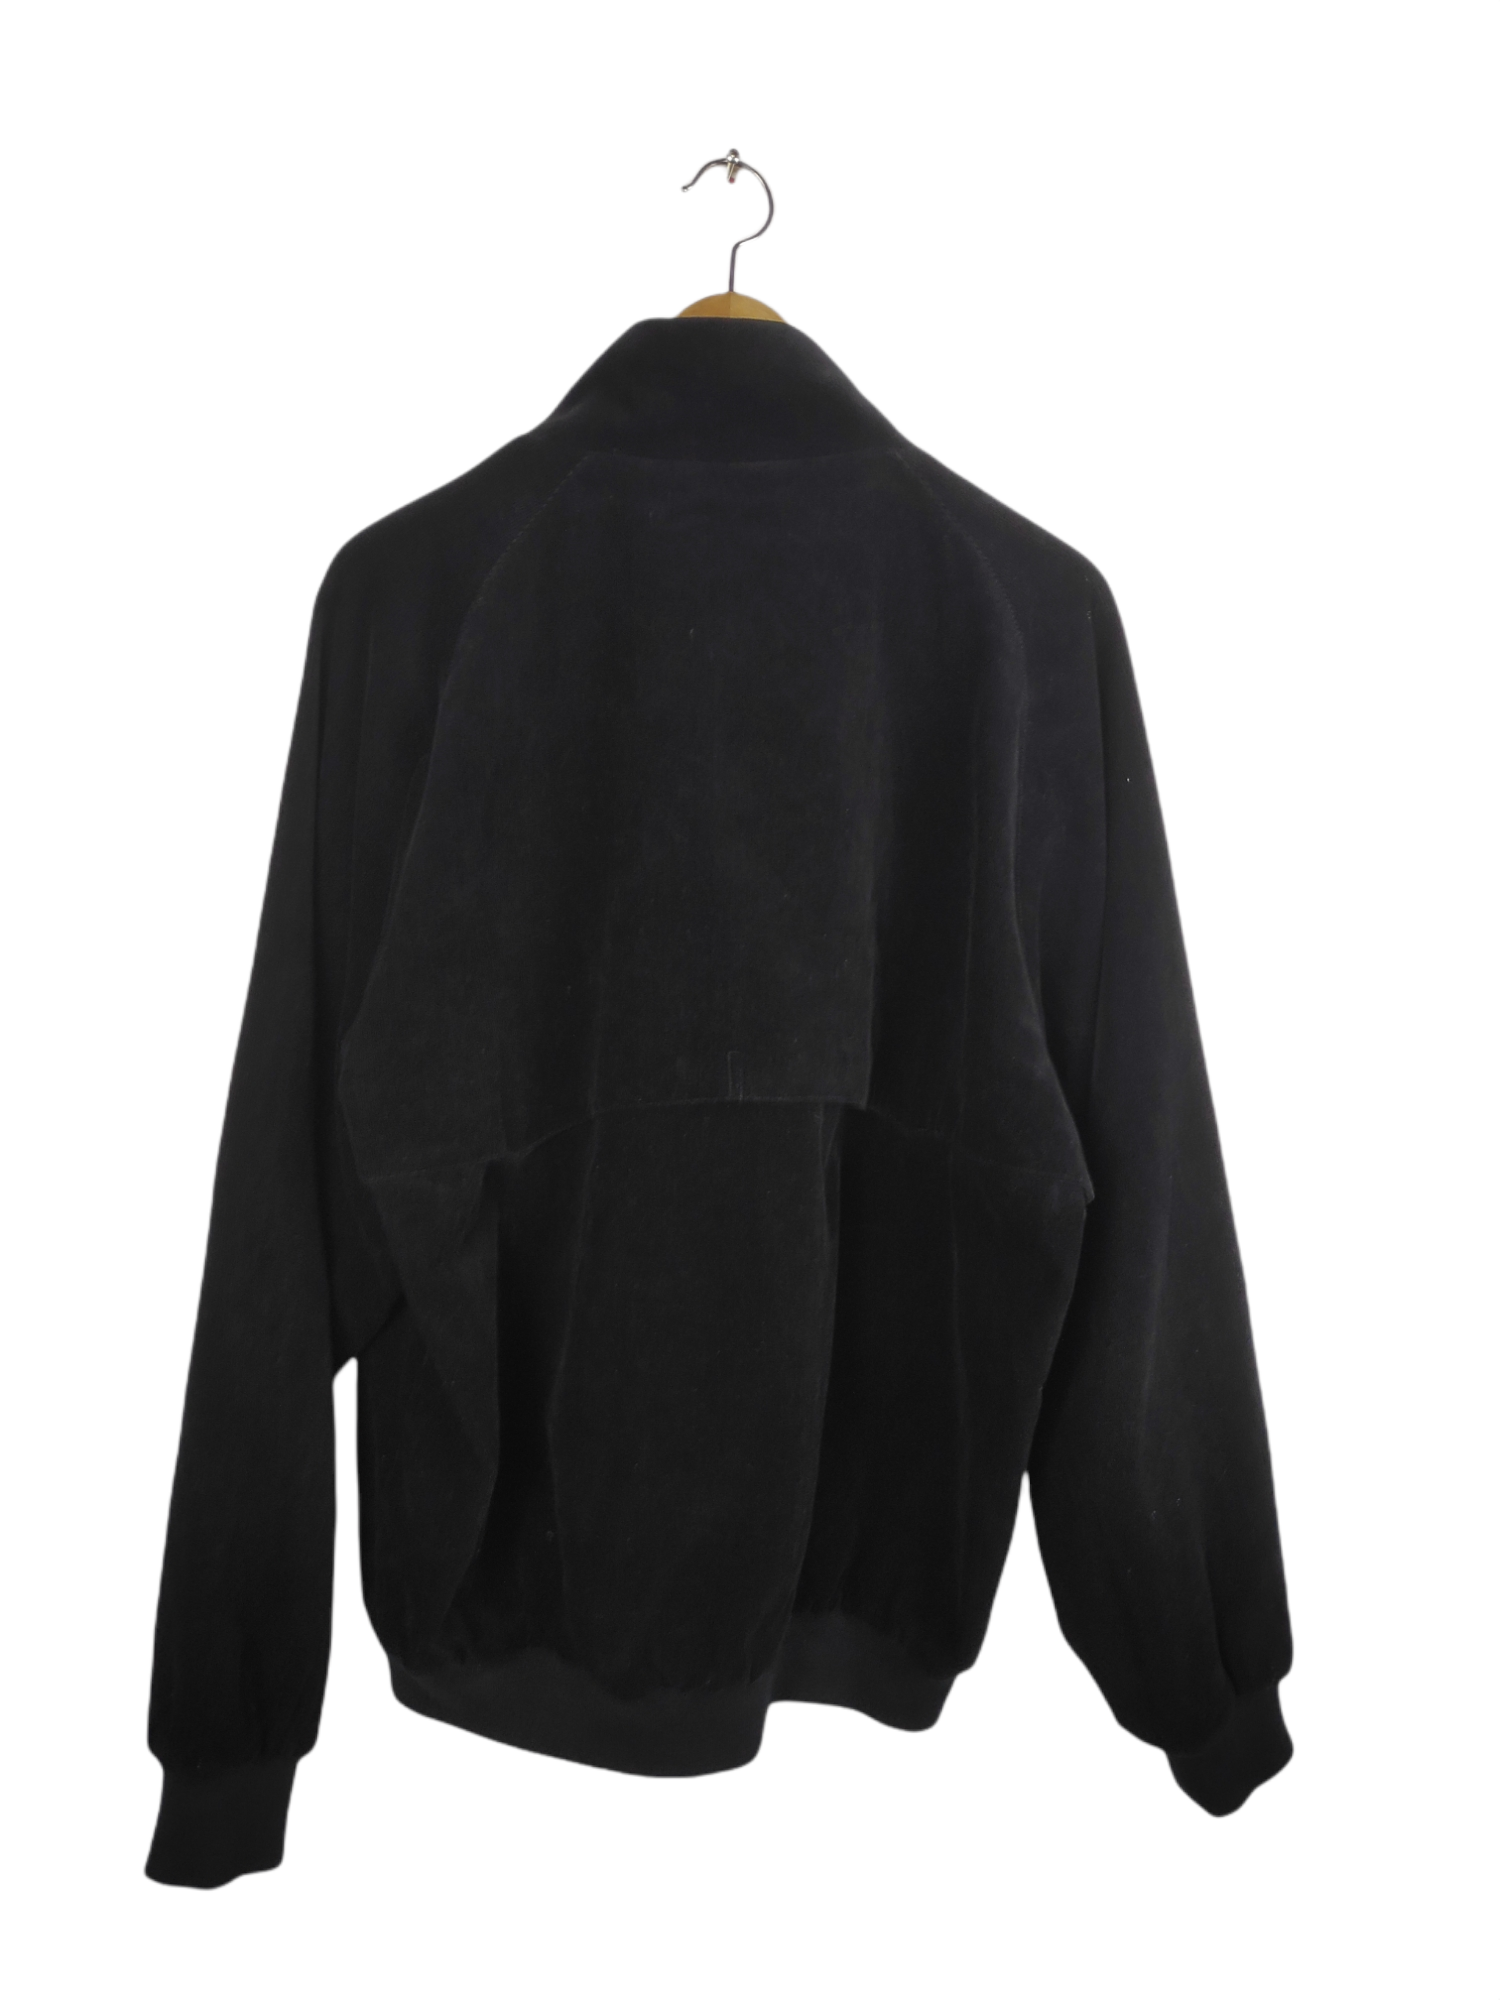 Vintage Lacoste Japan Made Corduroy Harrington Jacket - 4